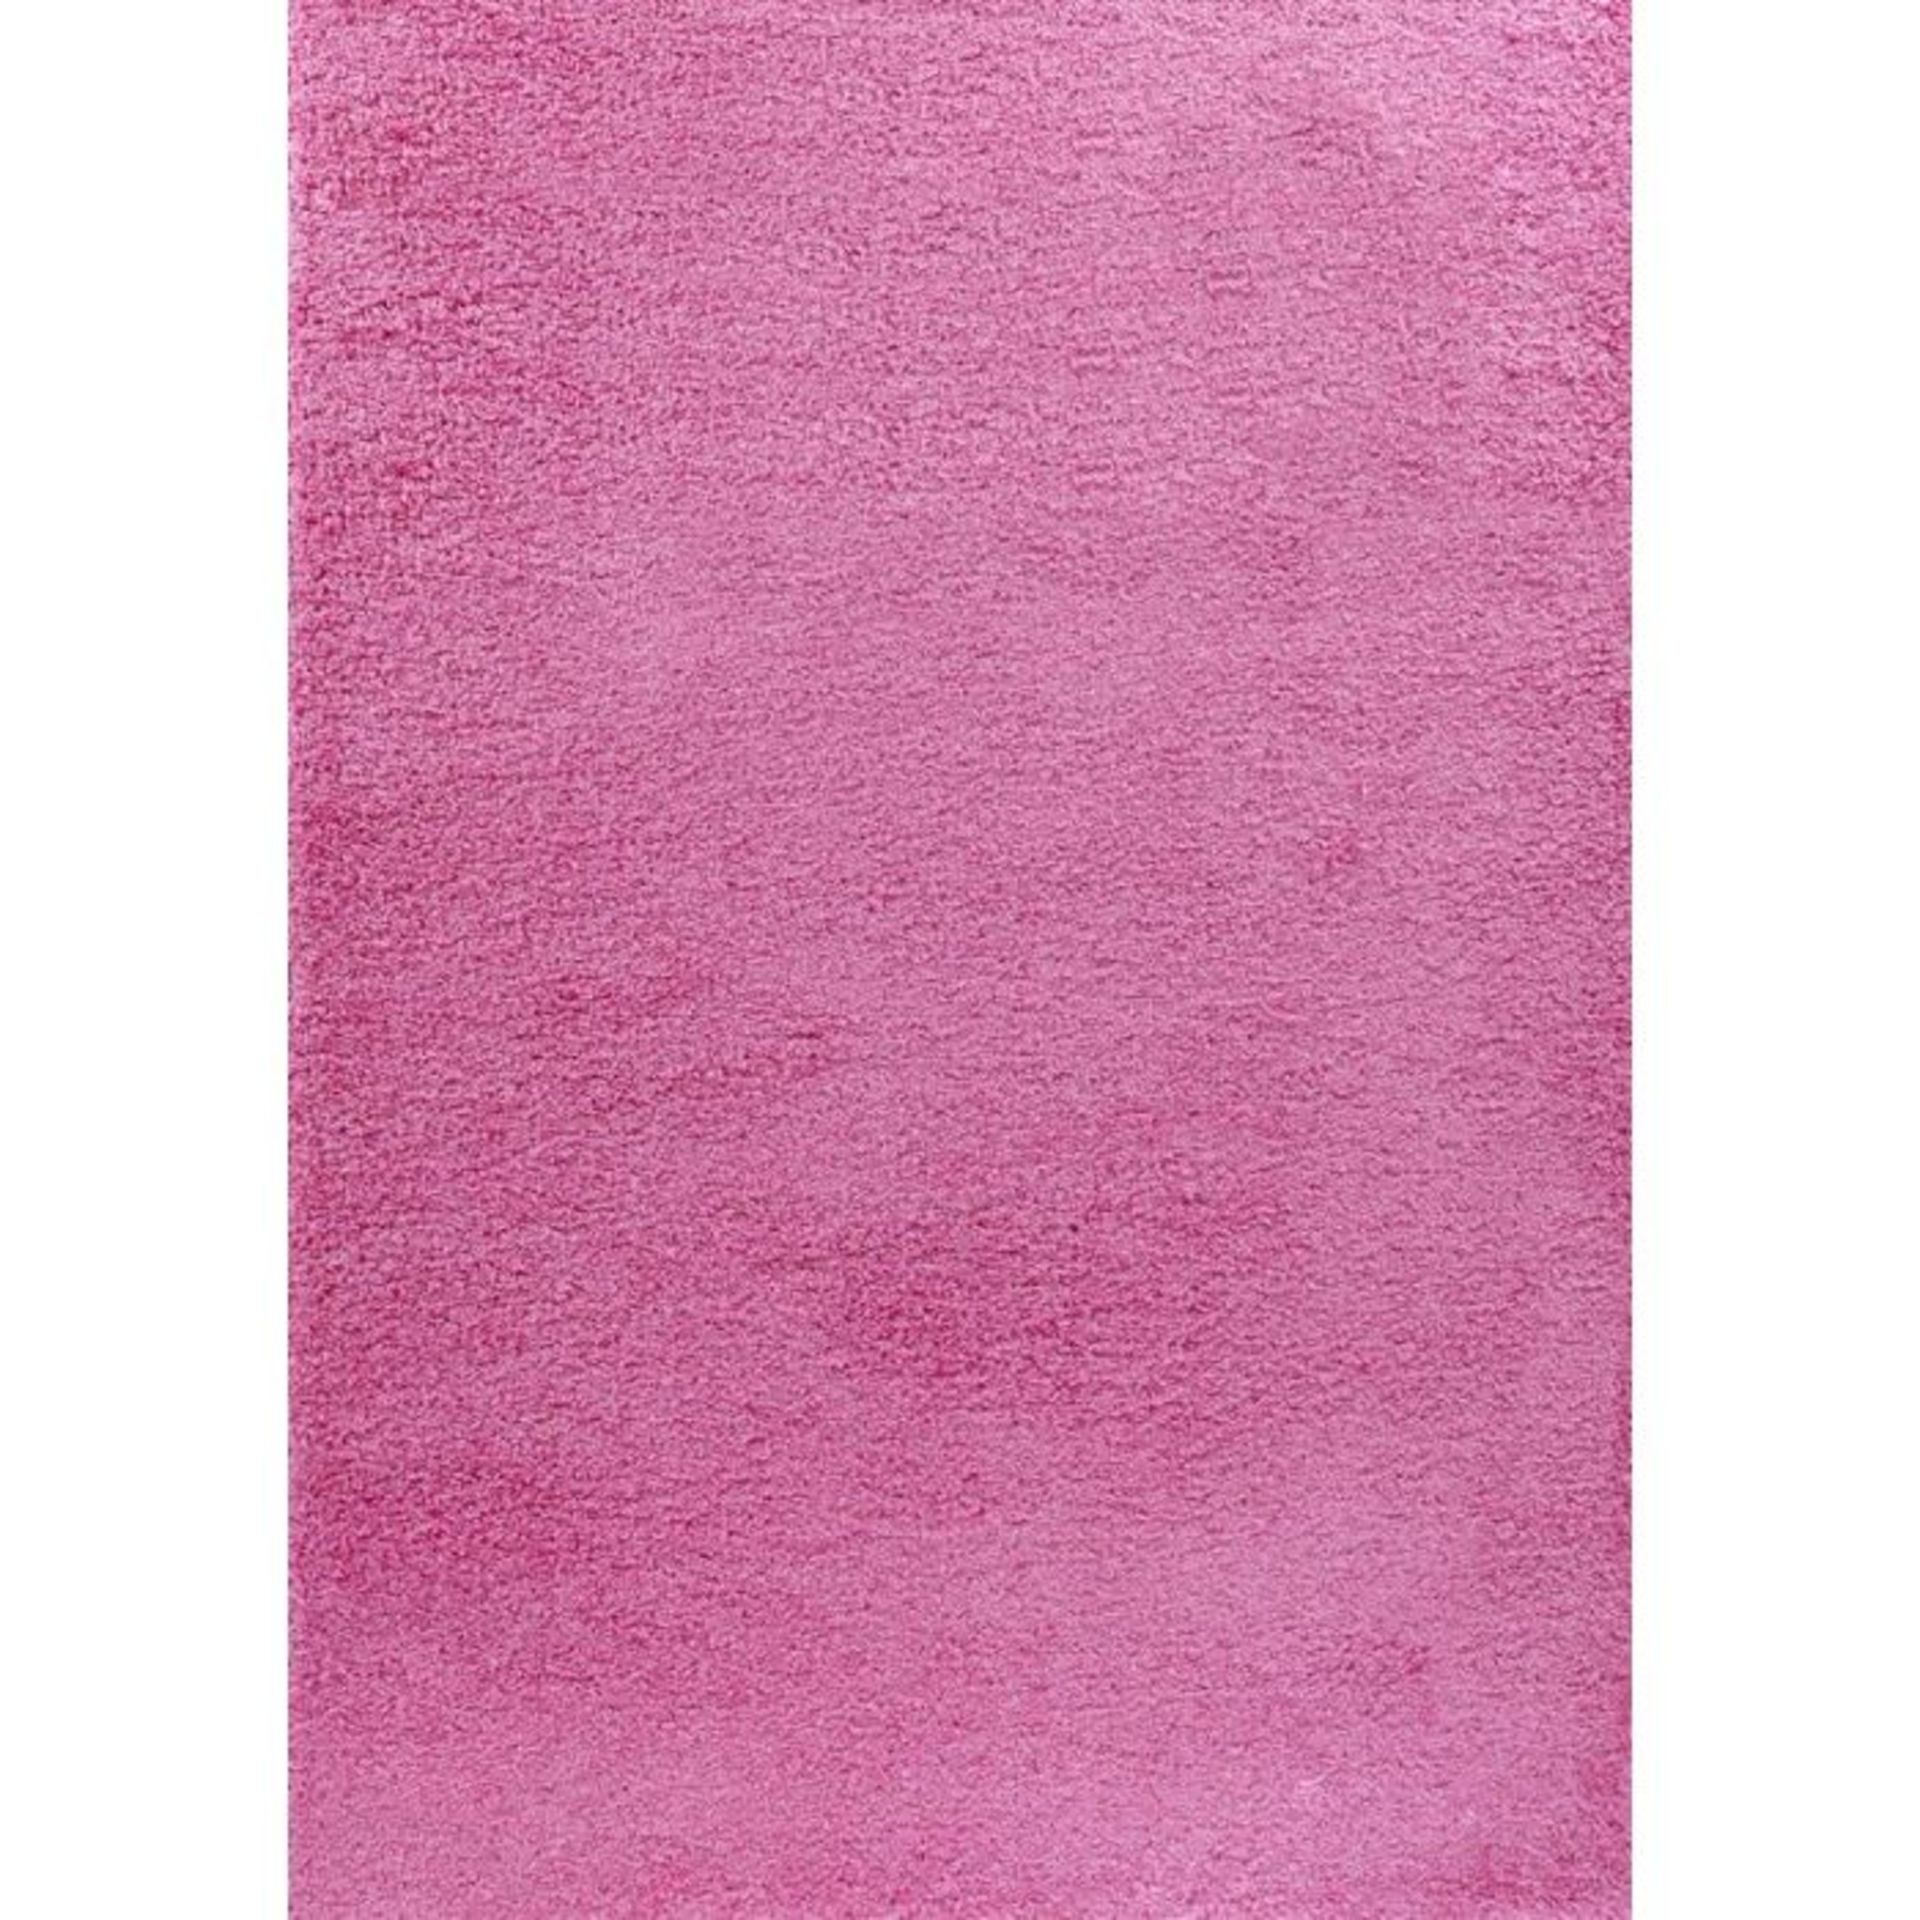 17 Stories,Griff Pink Rug (CCOO3200) RRP -£159.99 (26213/31 -CCOO3200)200cm x 290cm